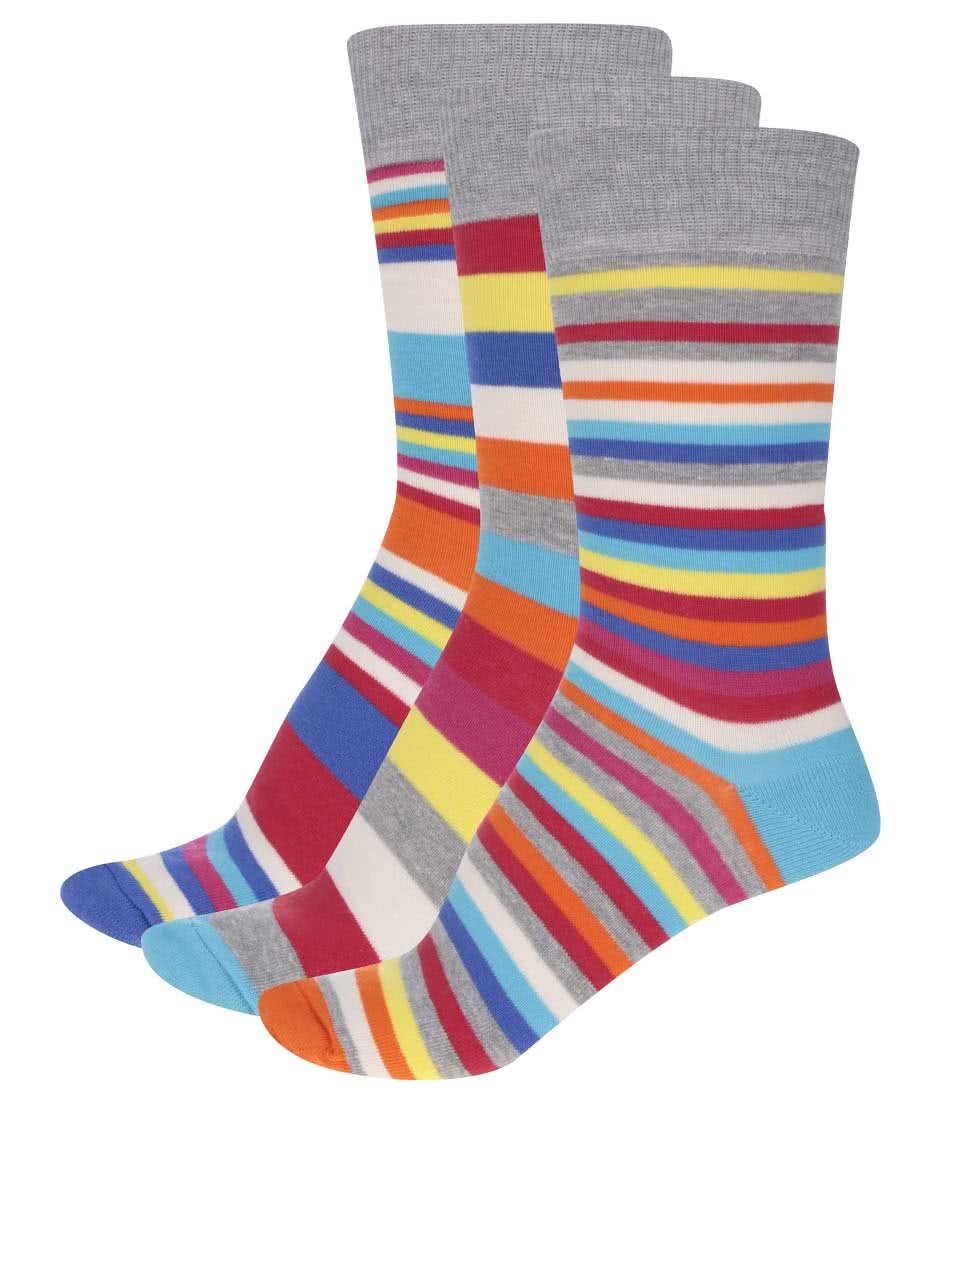 Sada tří pánských barevných ponožek s pruhy Oddsocks Will